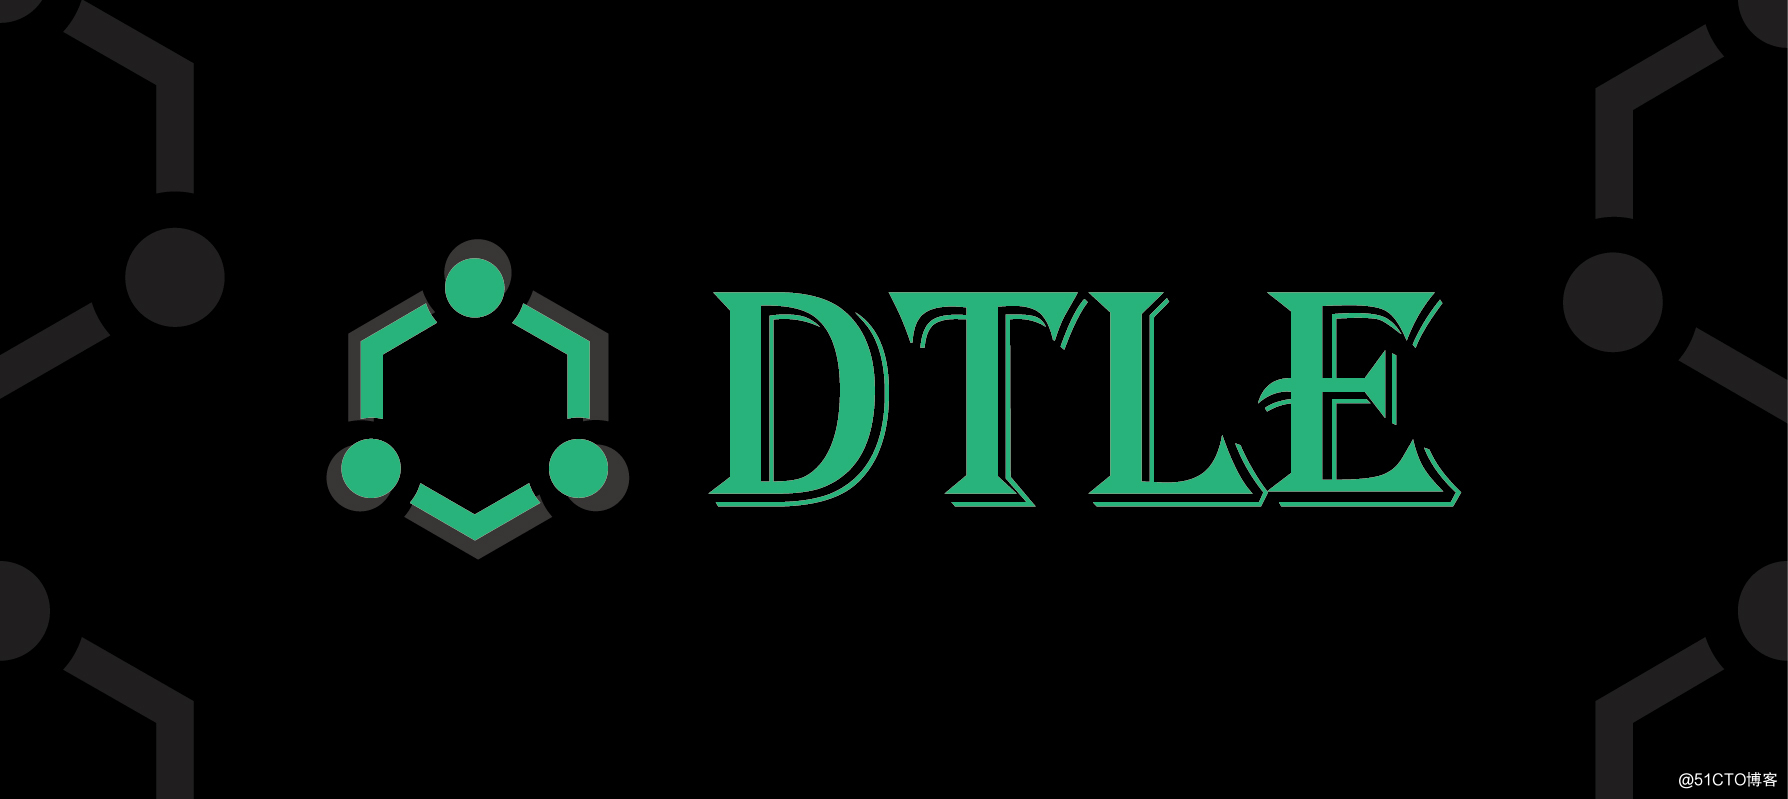 DTLE logo-01.jpg